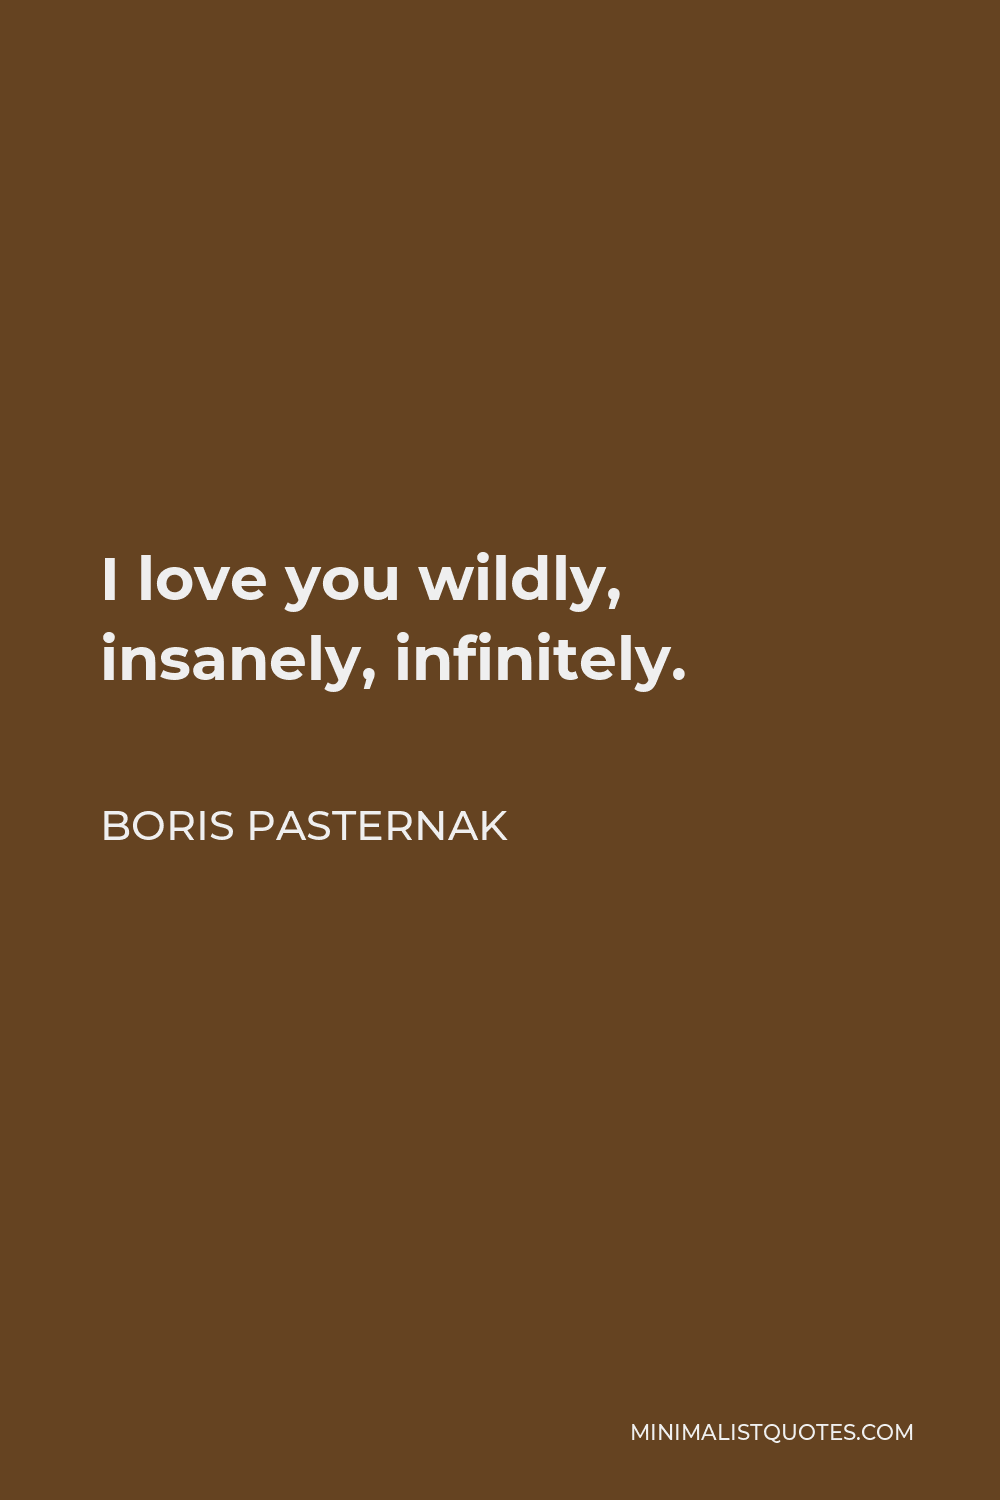 Boris Pasternak Quote - I love you wildly, insanely, infinitely.